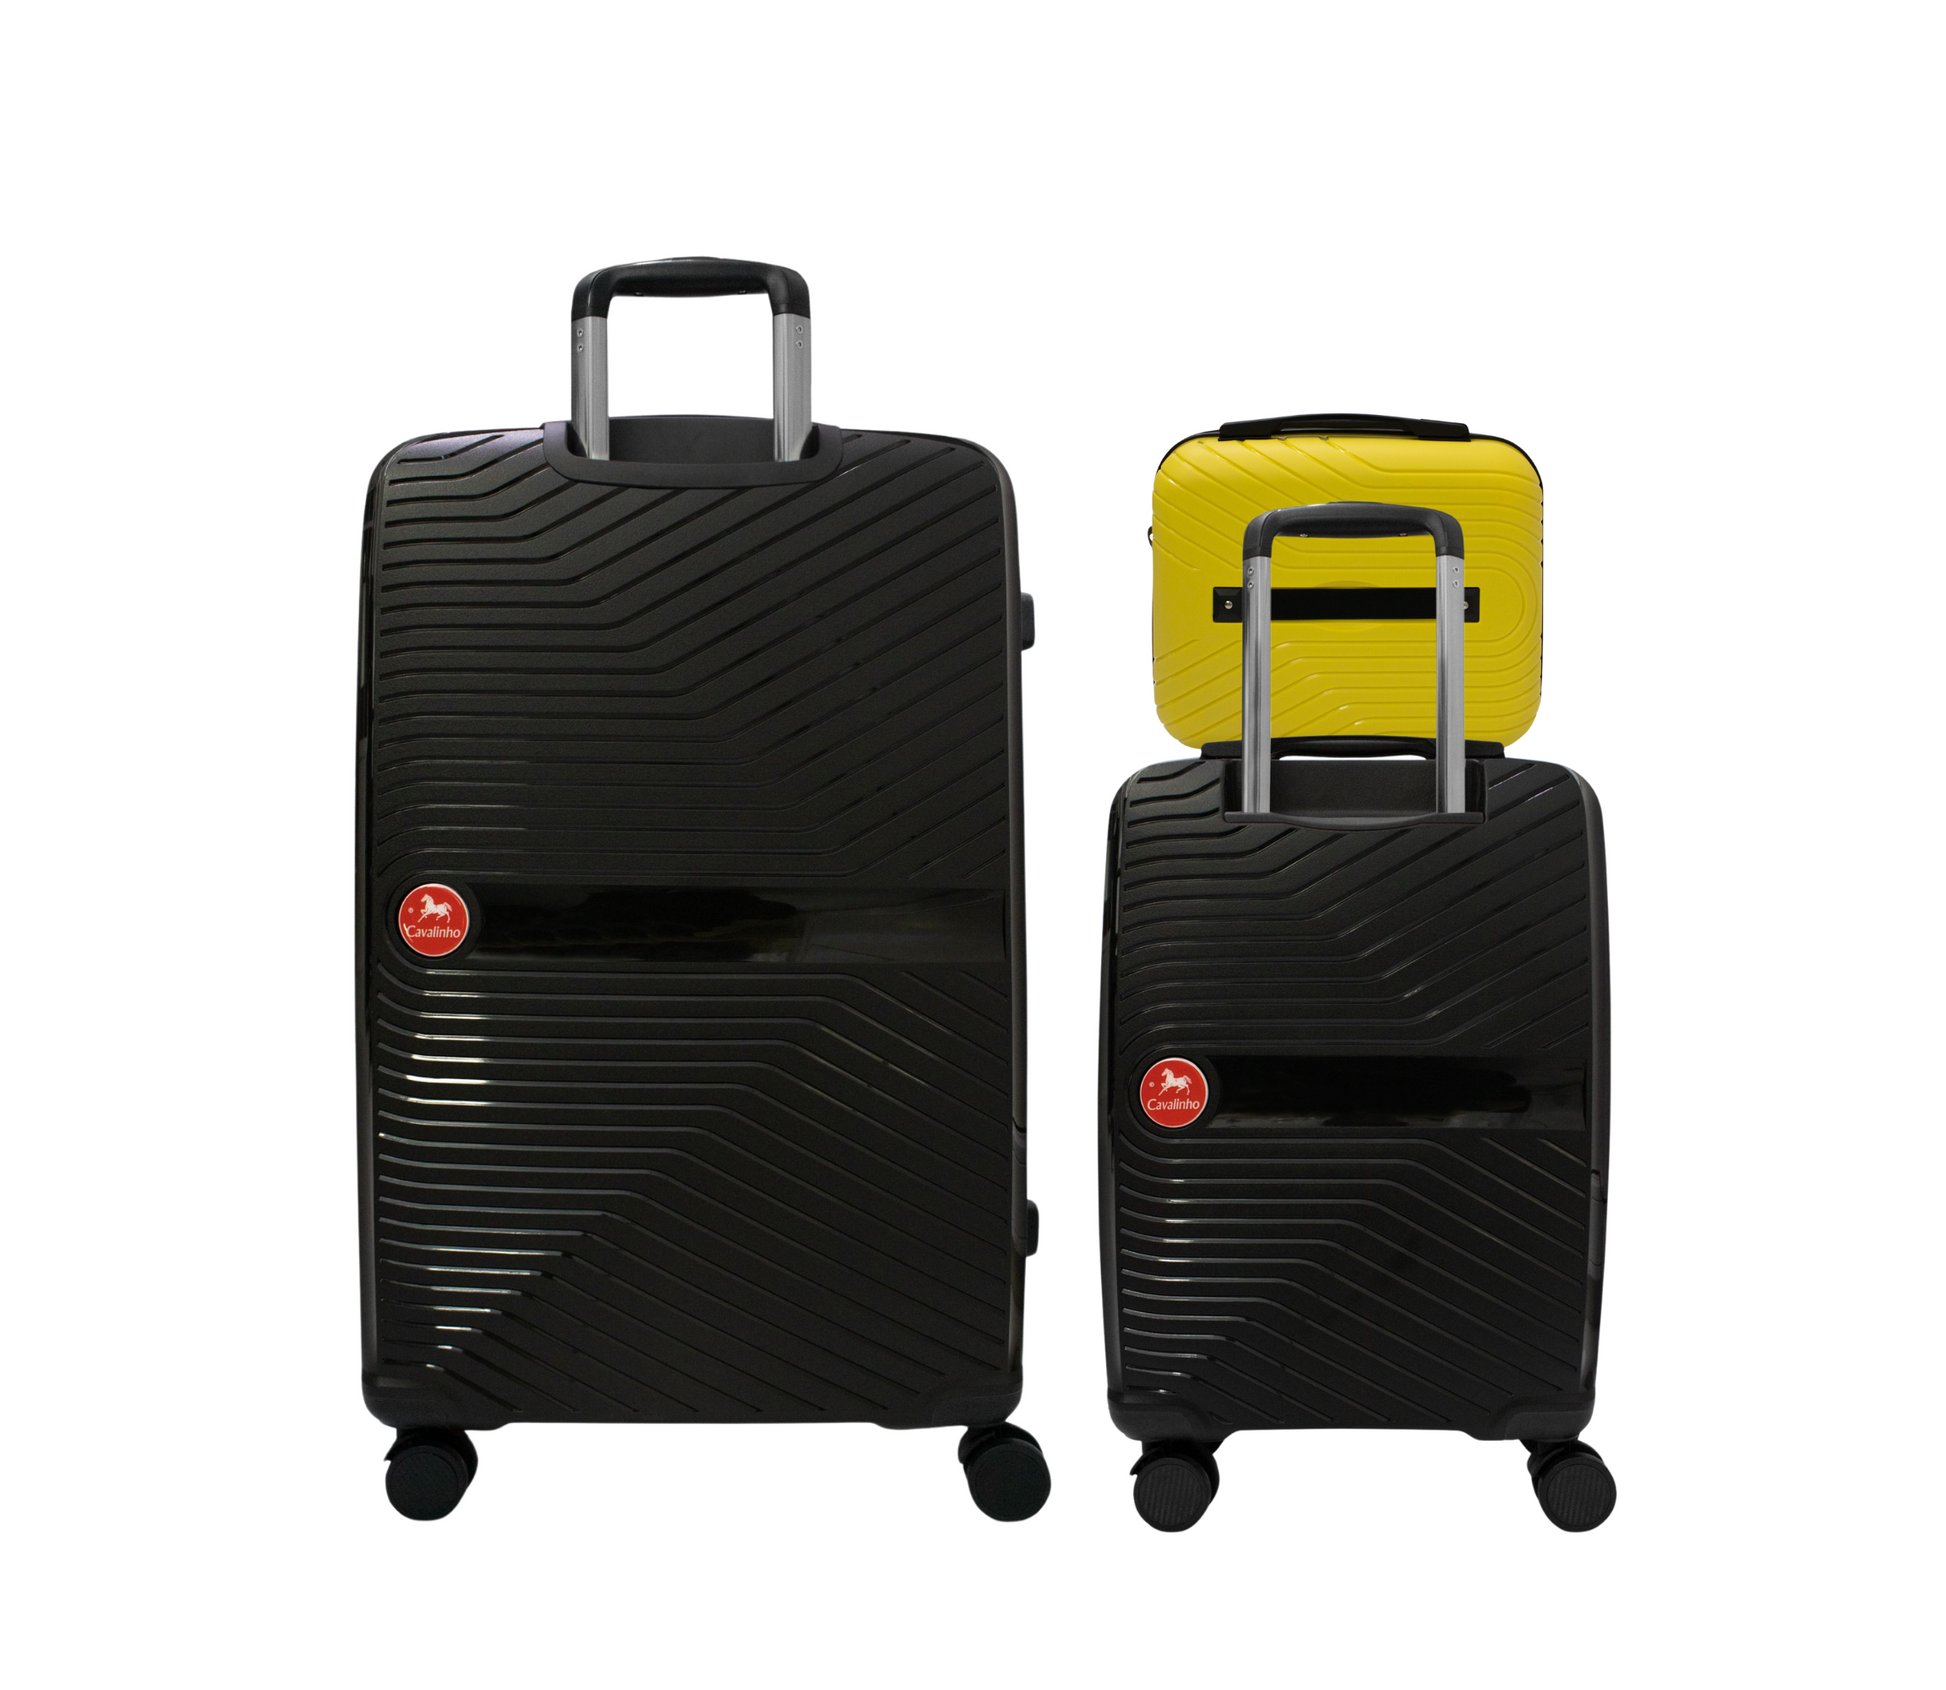 Cavalinho Colorful 3 Piece Luggage Set (15", 19" & 28") - Yellow Black Black - 68020004.080101.S151928._3